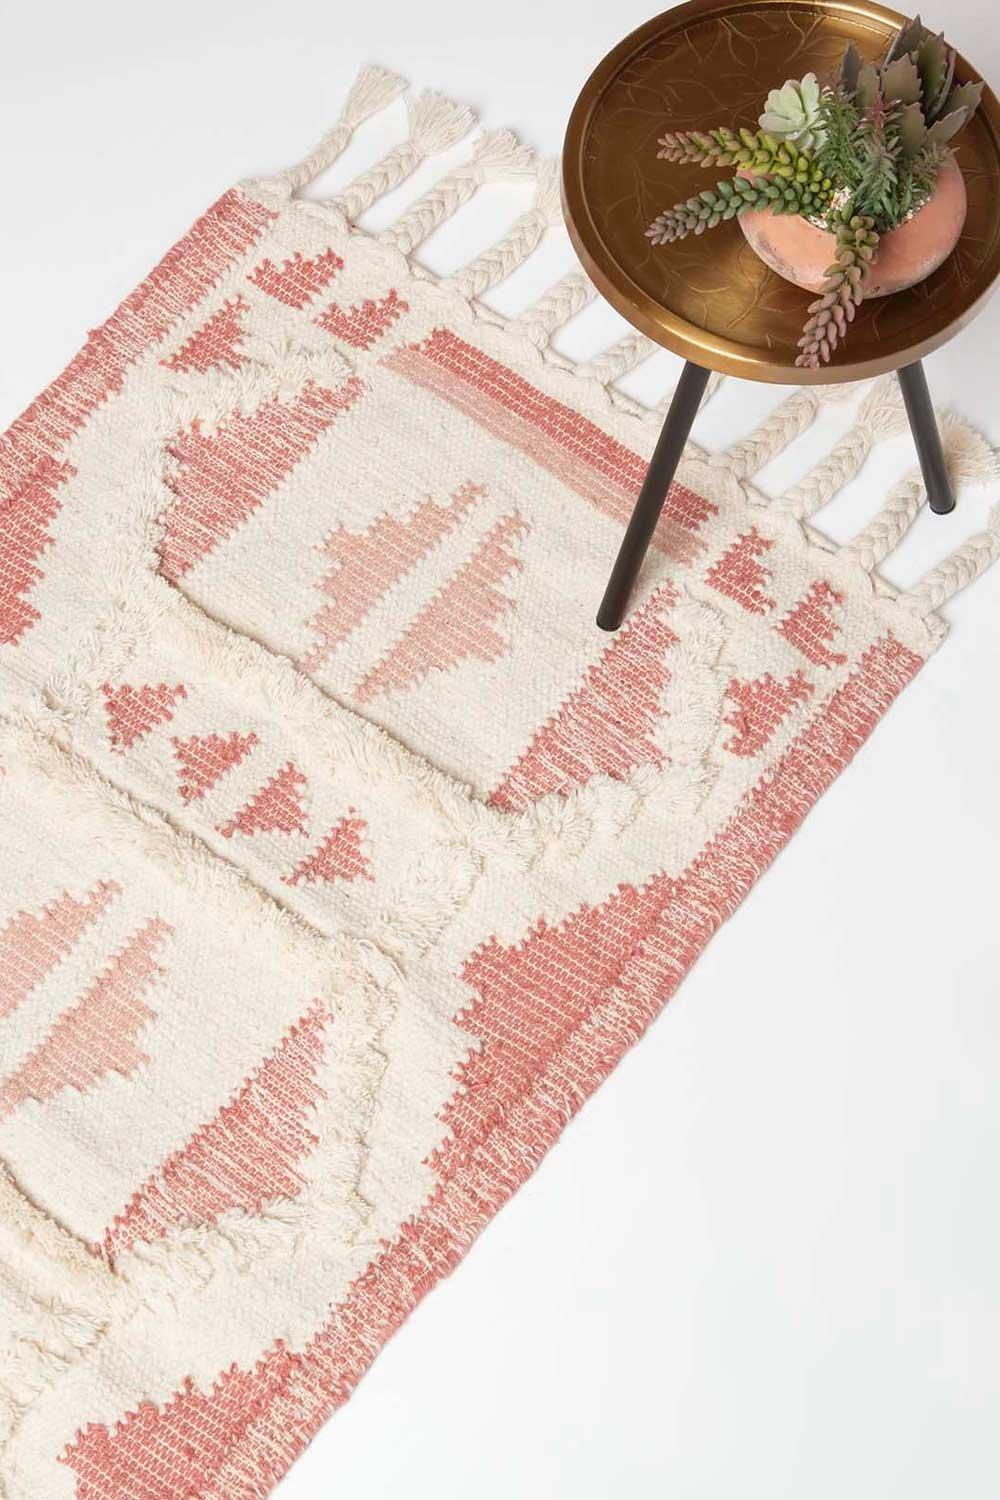 Satara Pink Kilim Runner Wool Rug 66 x 200 cm